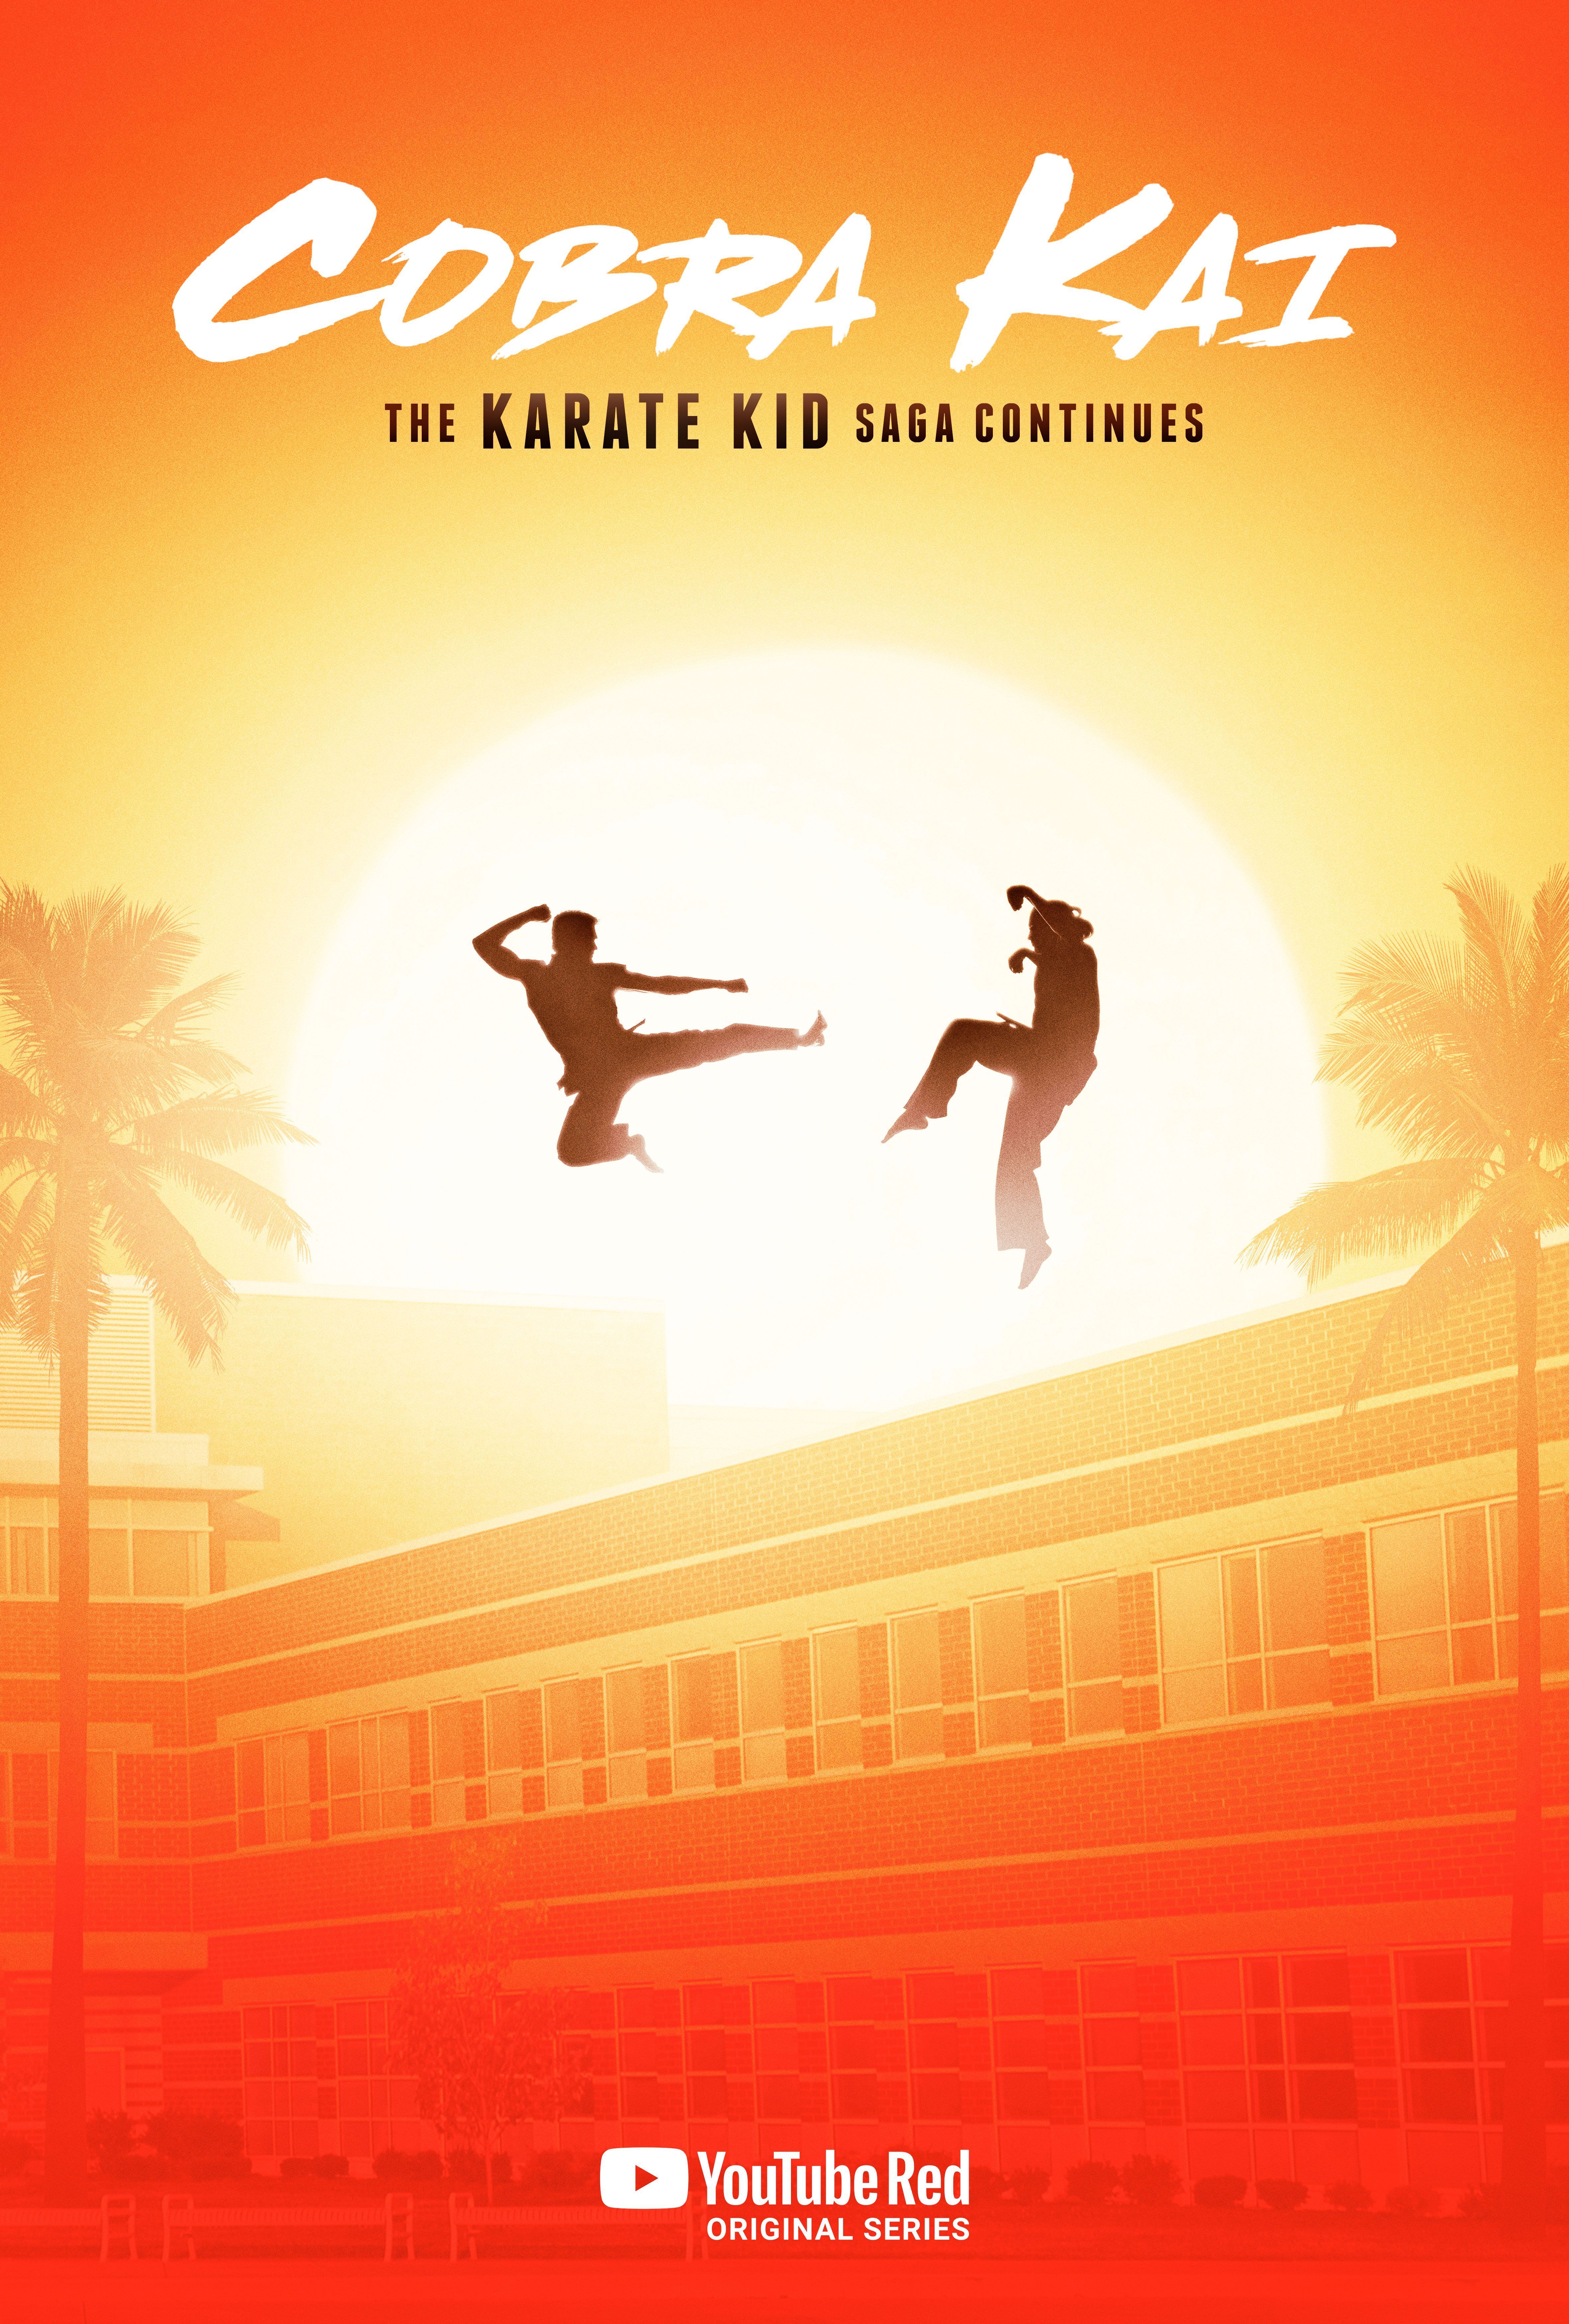 Cobra Kai Wallpaper. Karate kid movie, Karate kid, Karate